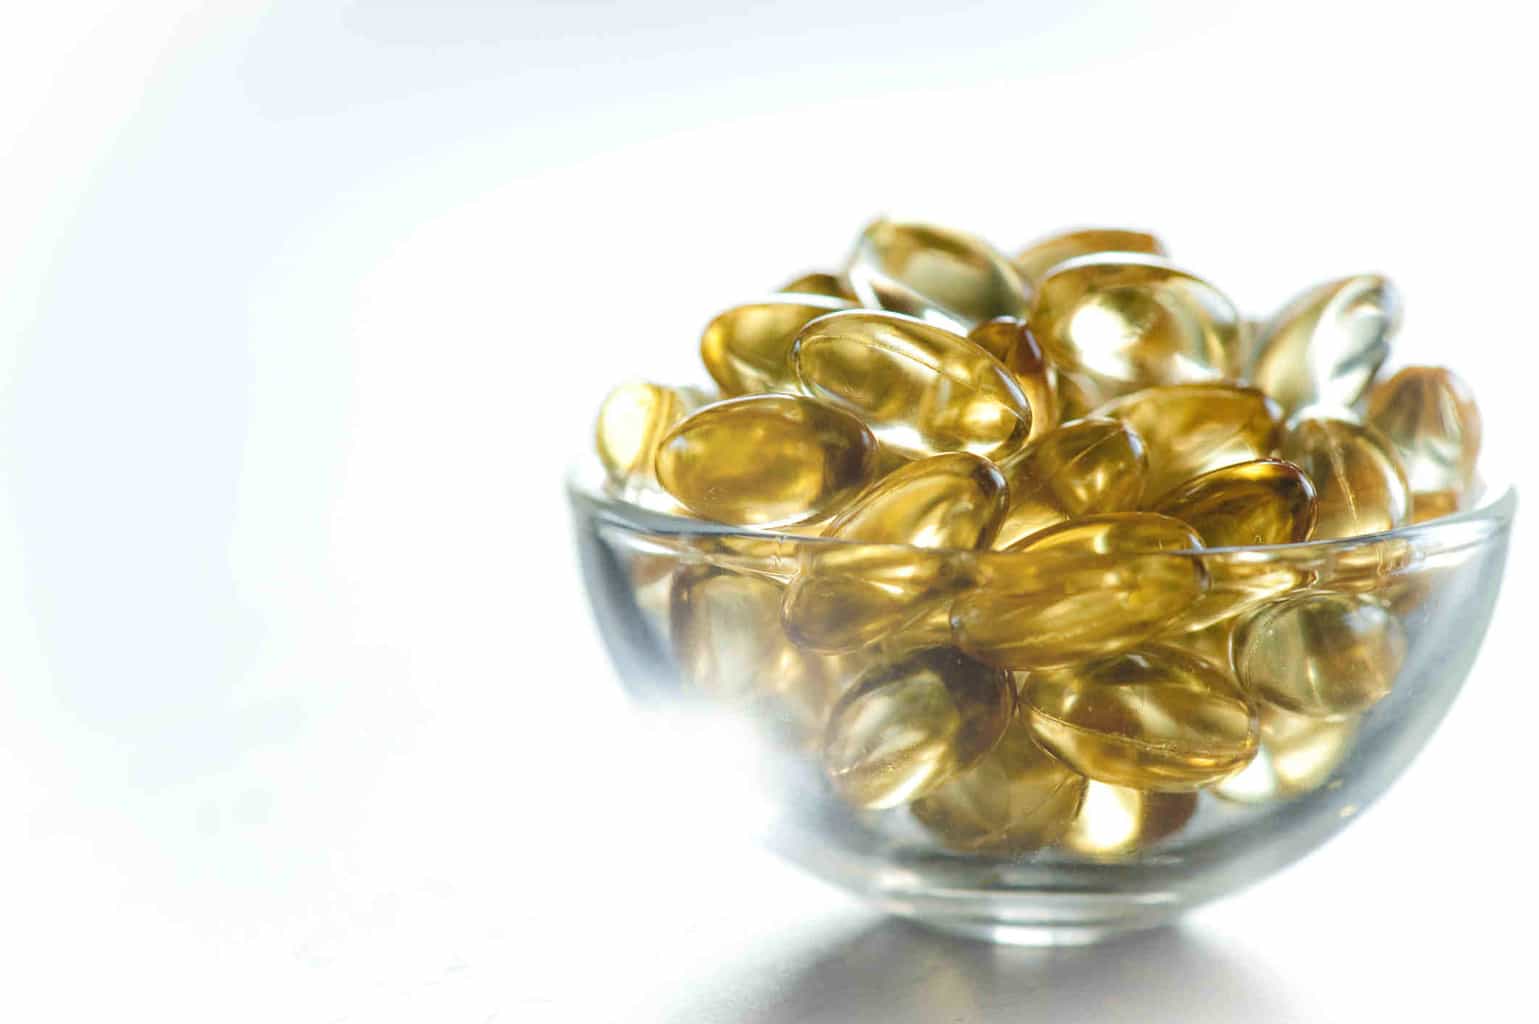 A caution against vitamin E supplements